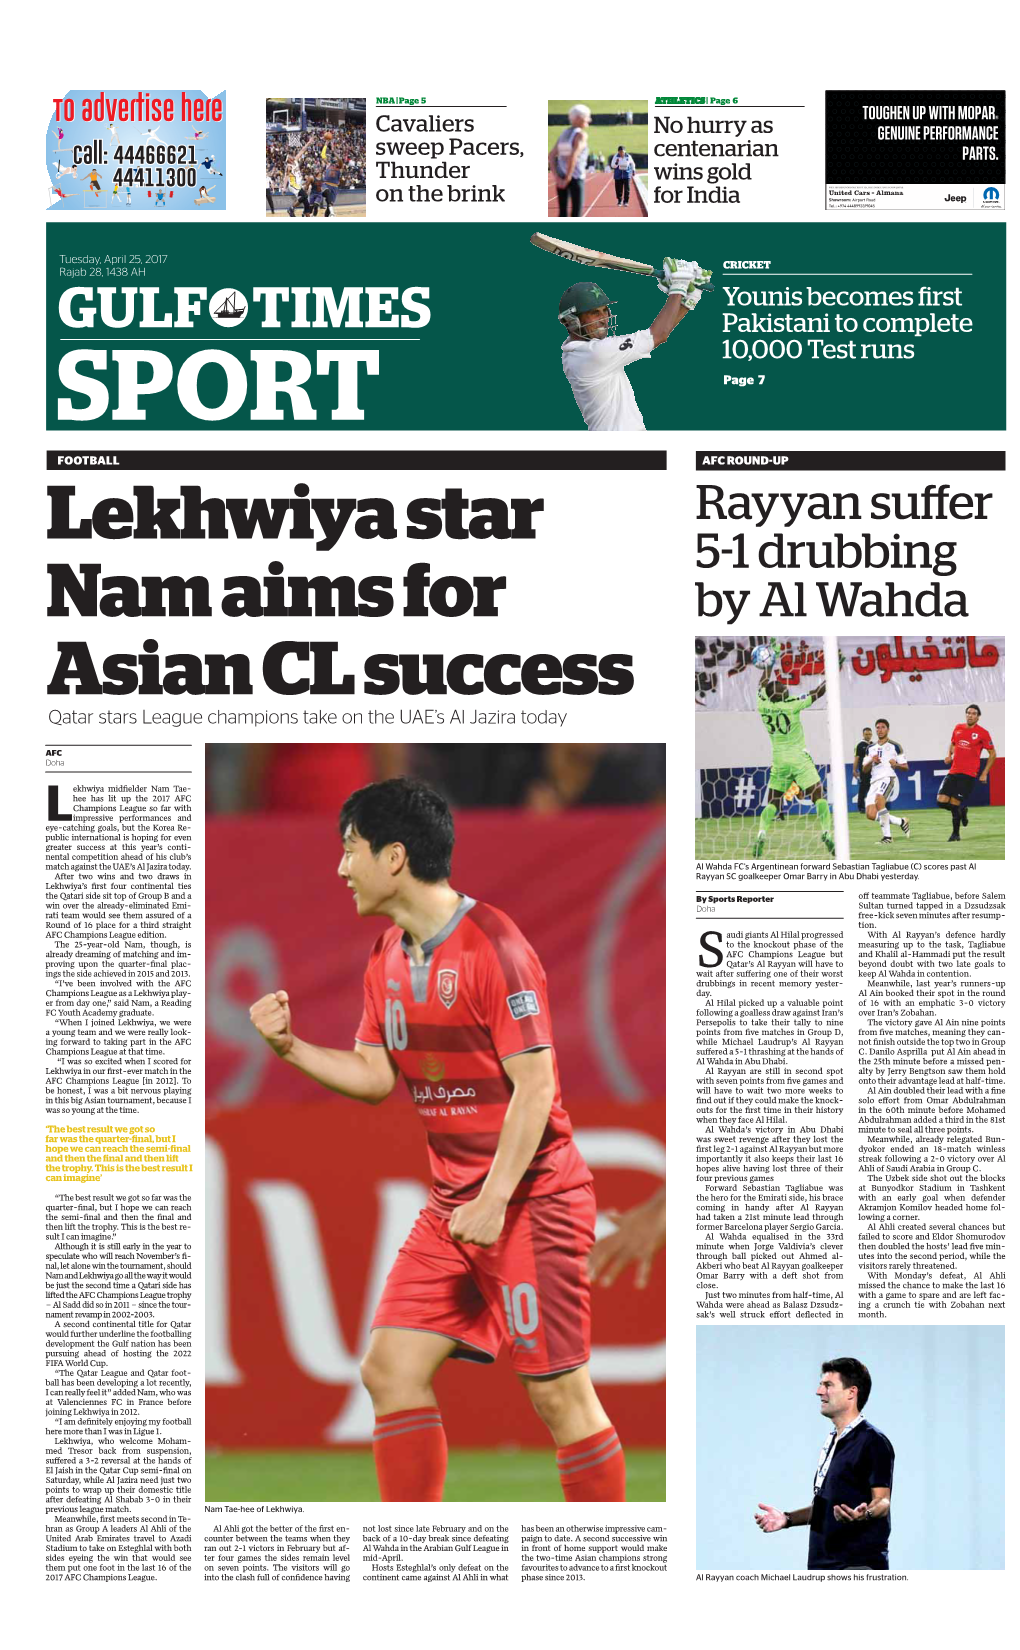 Lekhwiya Star Rayyan Suff Er 5-1 Drubbing Nam Aims for by Al Wahda Asian CL Success Qatar Stars League Champions Take on the UAE’S Al Jazira Today